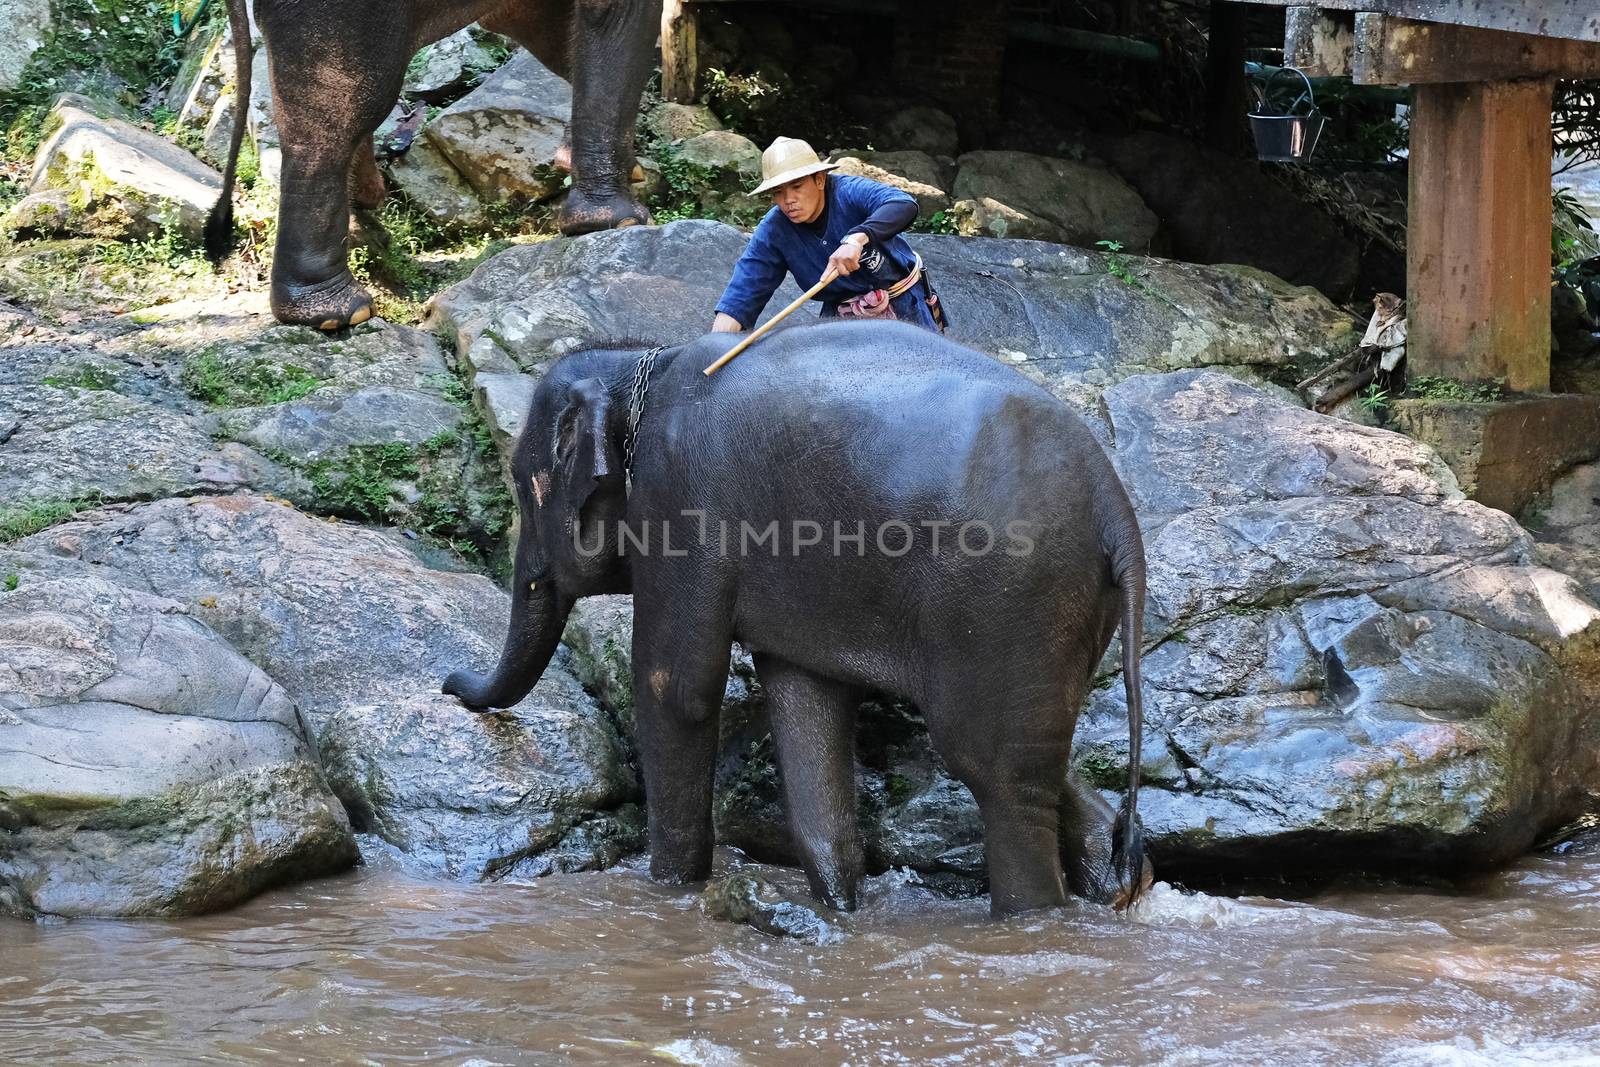 CHIANG MAI - THAILAND: NOVEMBER 14, 2016 - The elephants take the daily bath in the riveron November 14, 2016 at Mae Sa Elephant Camp in Chiang Mai, Thailand